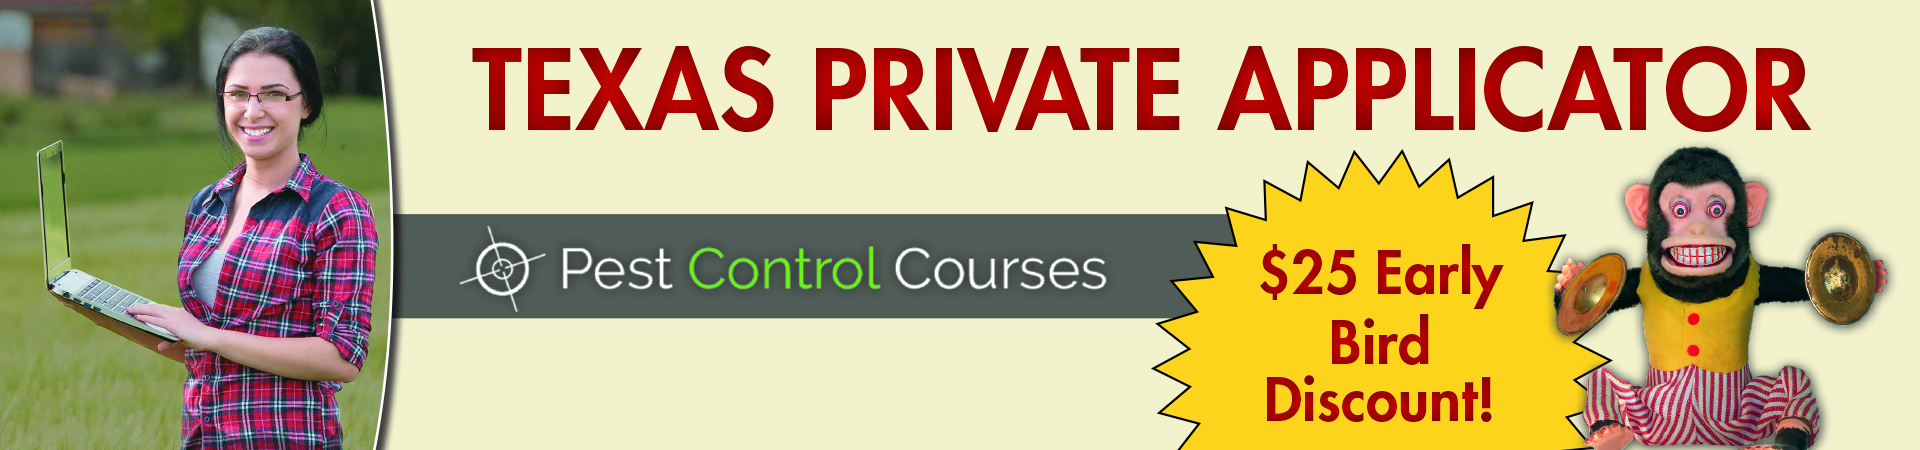 Pest Control Courses